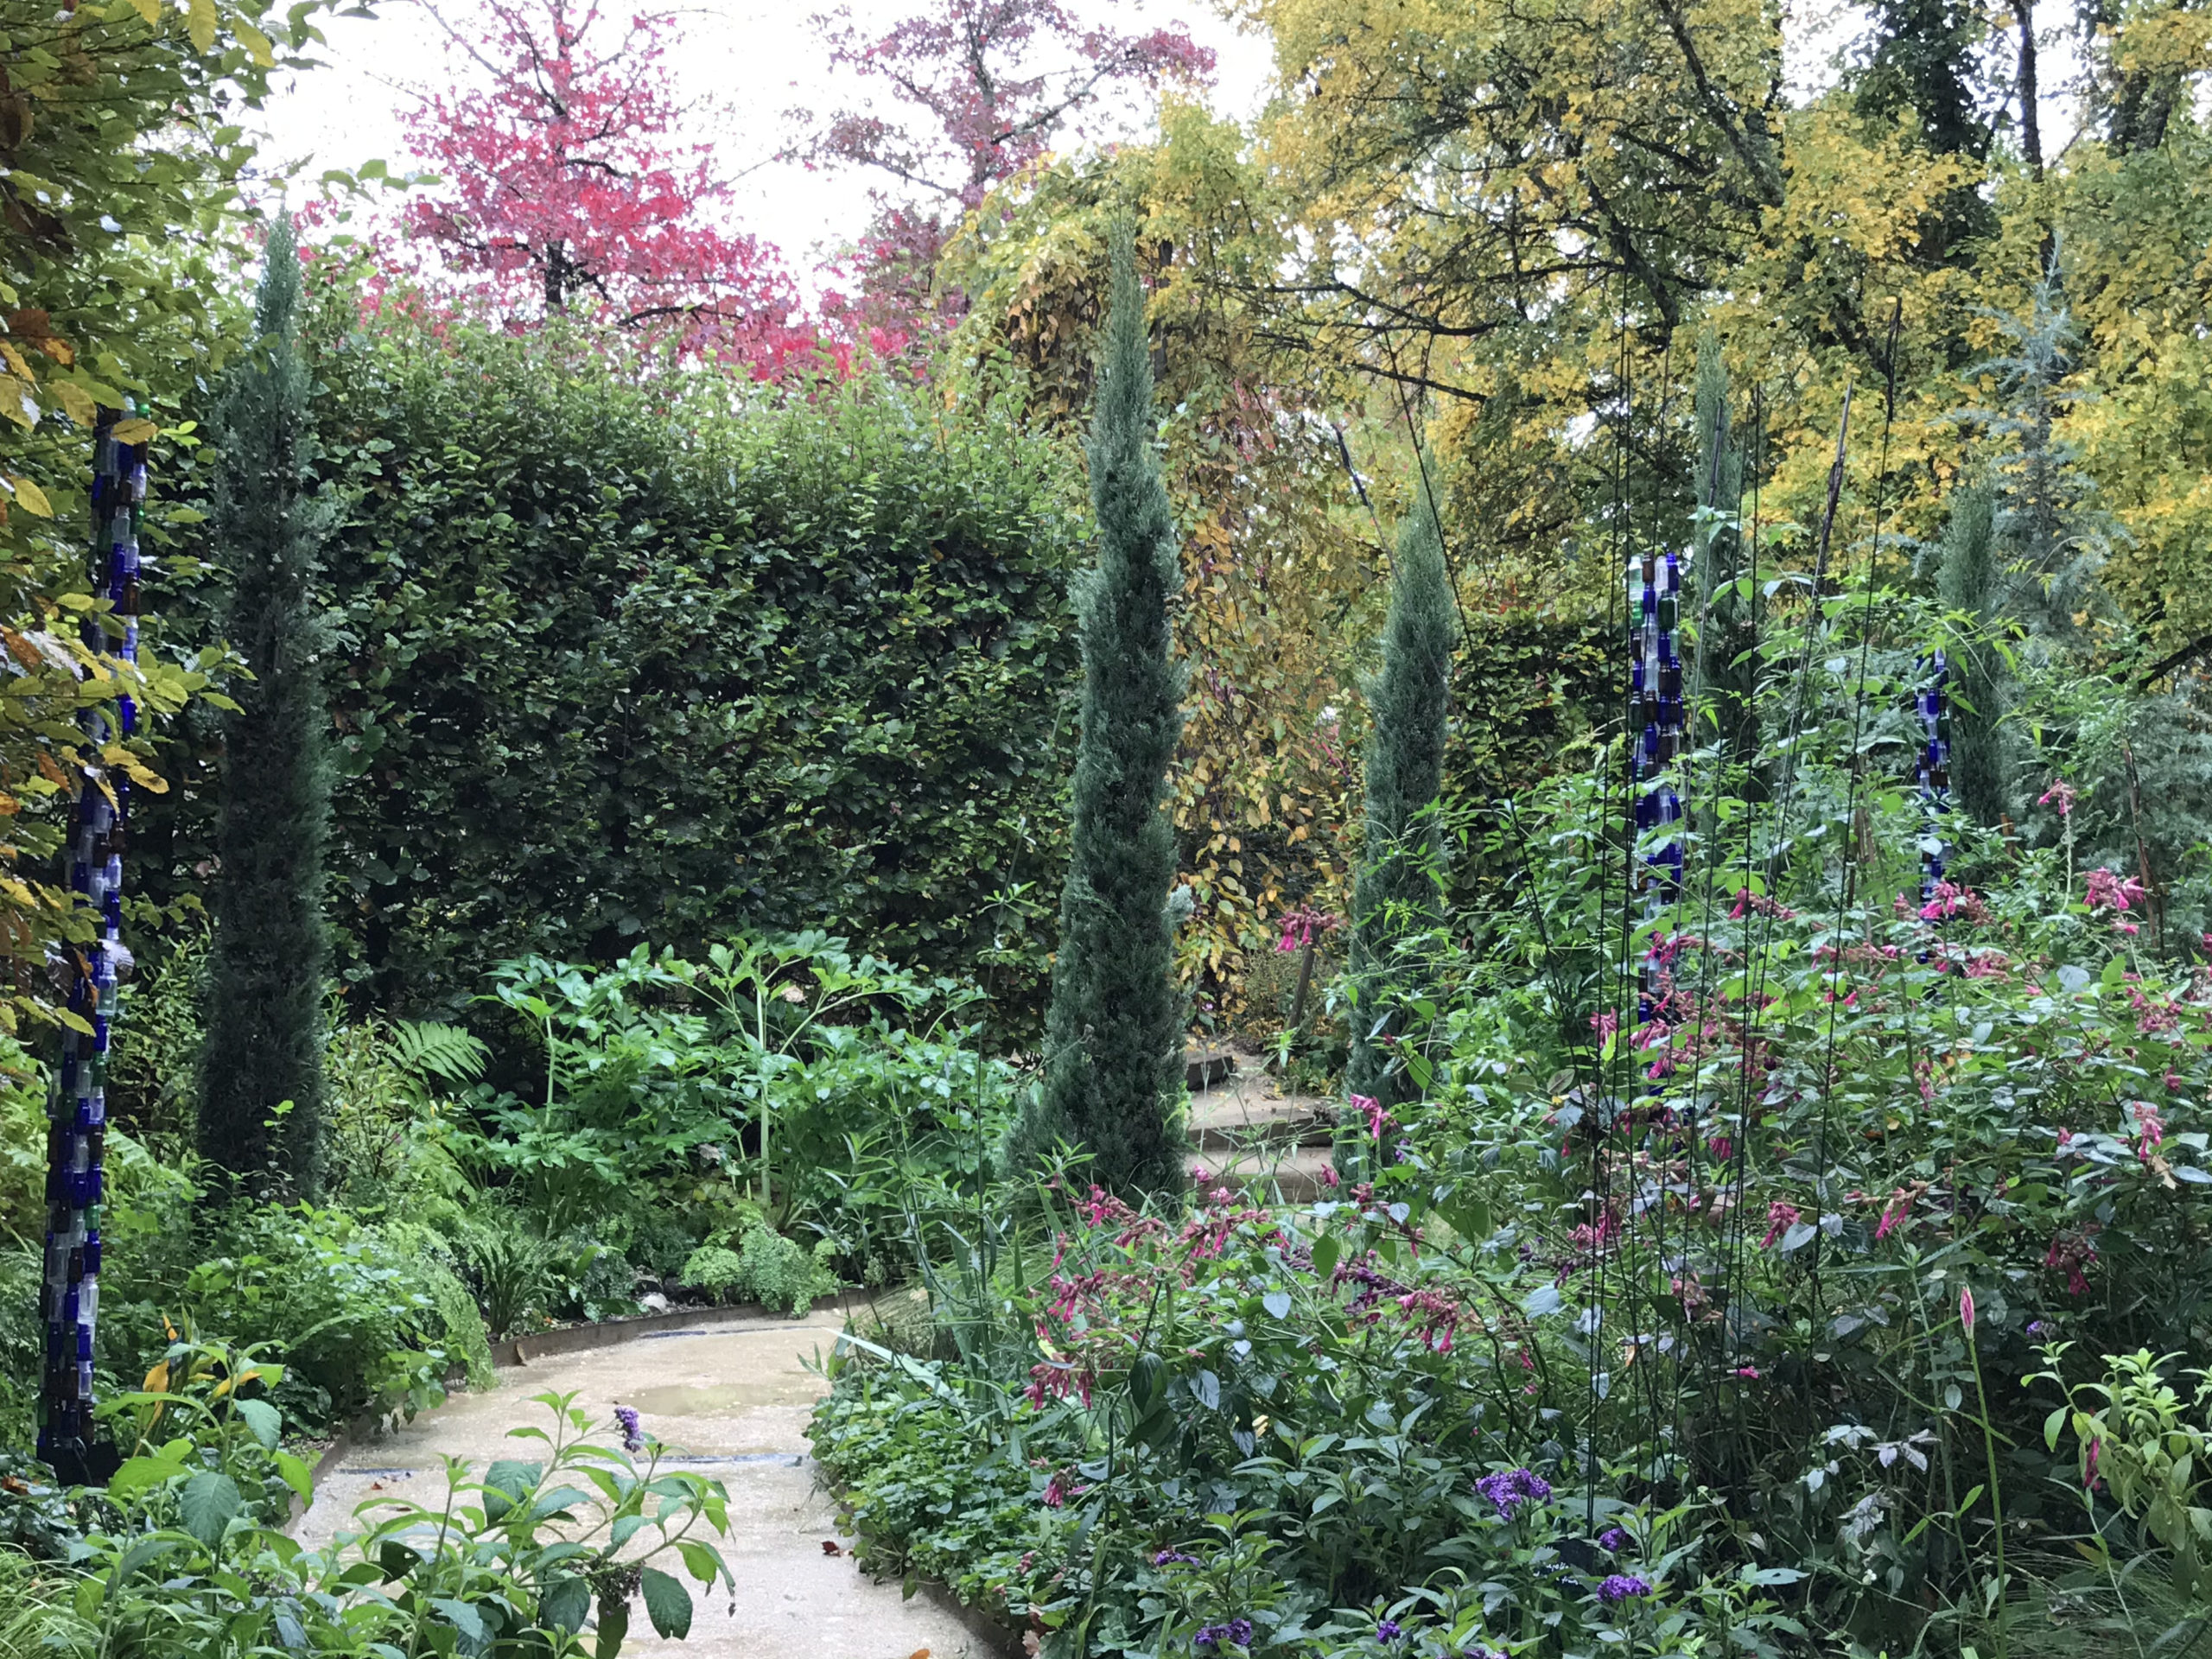 Tuinontwerp, Chaumont Paradise perfume garden 2019,, door Caroline Thomas, tuinontwerper bij Tuinen van Thomas